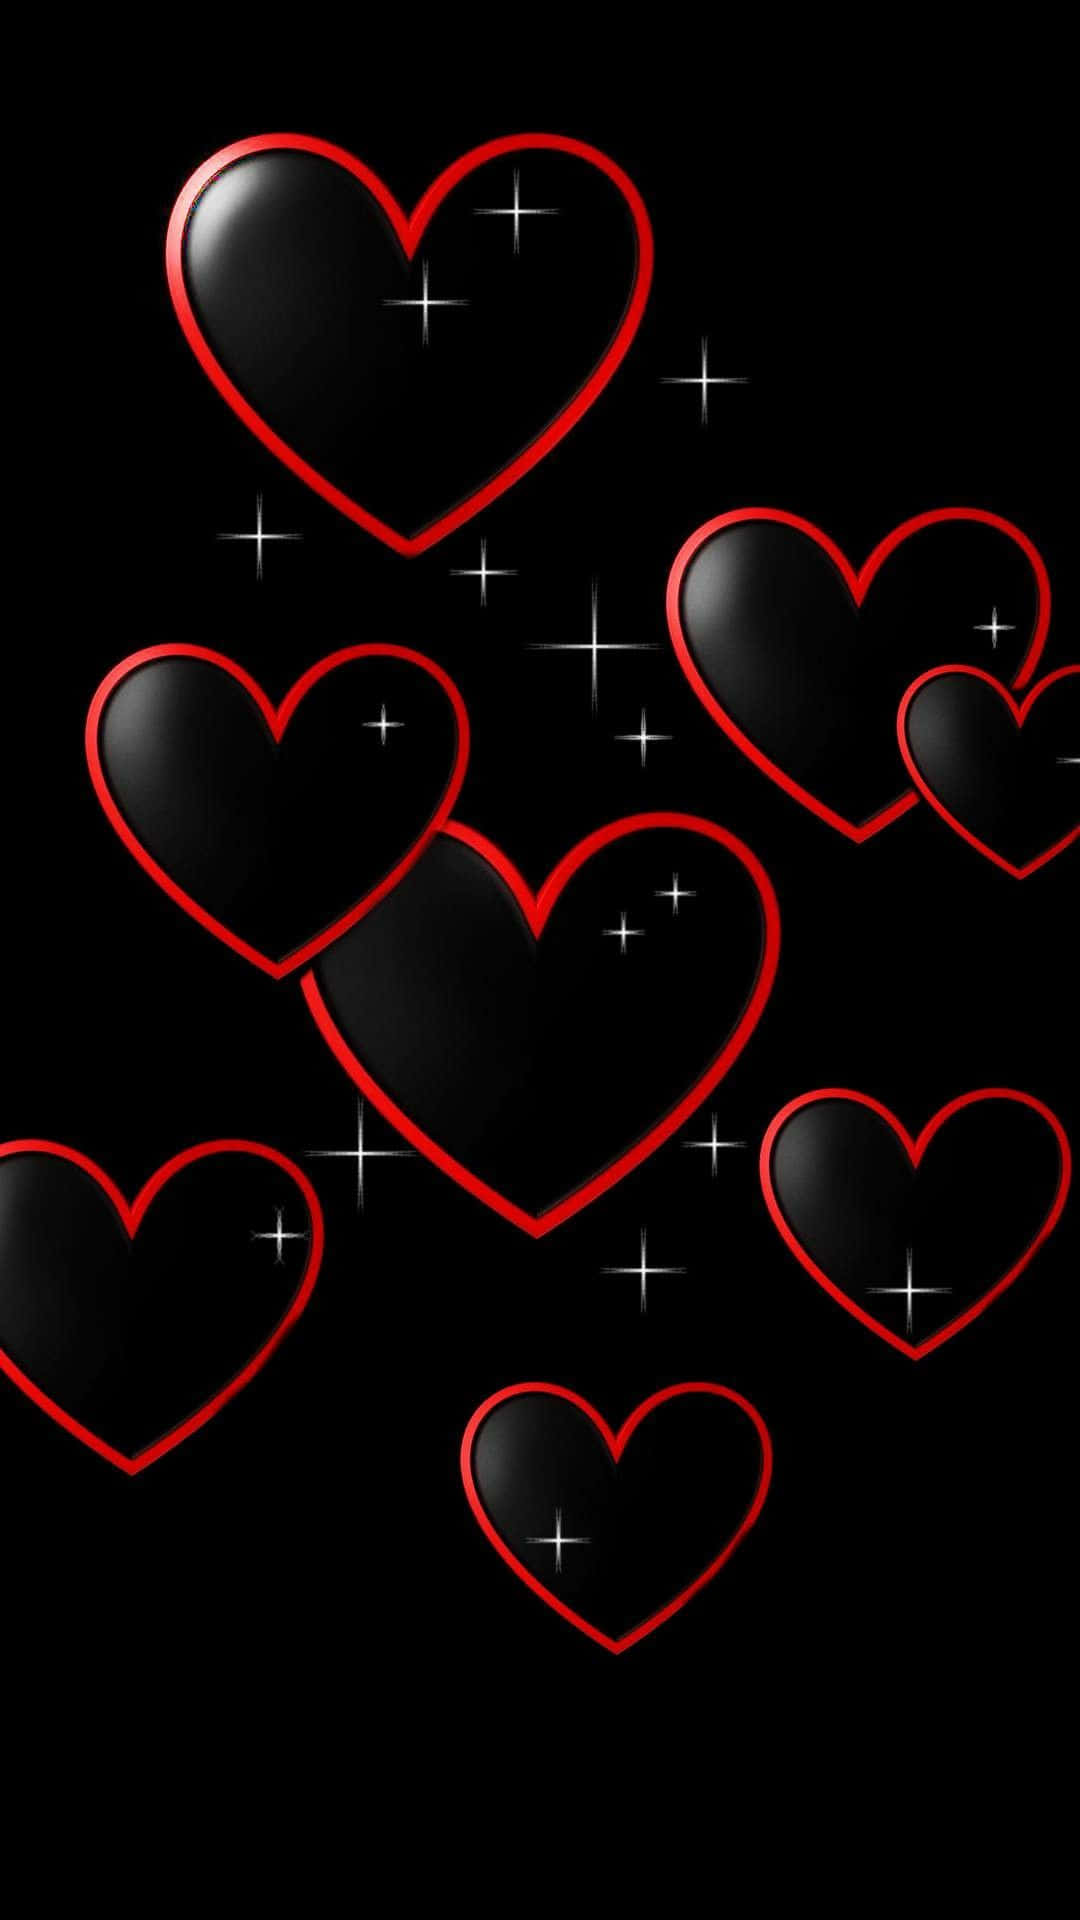 Love heart wallpaper